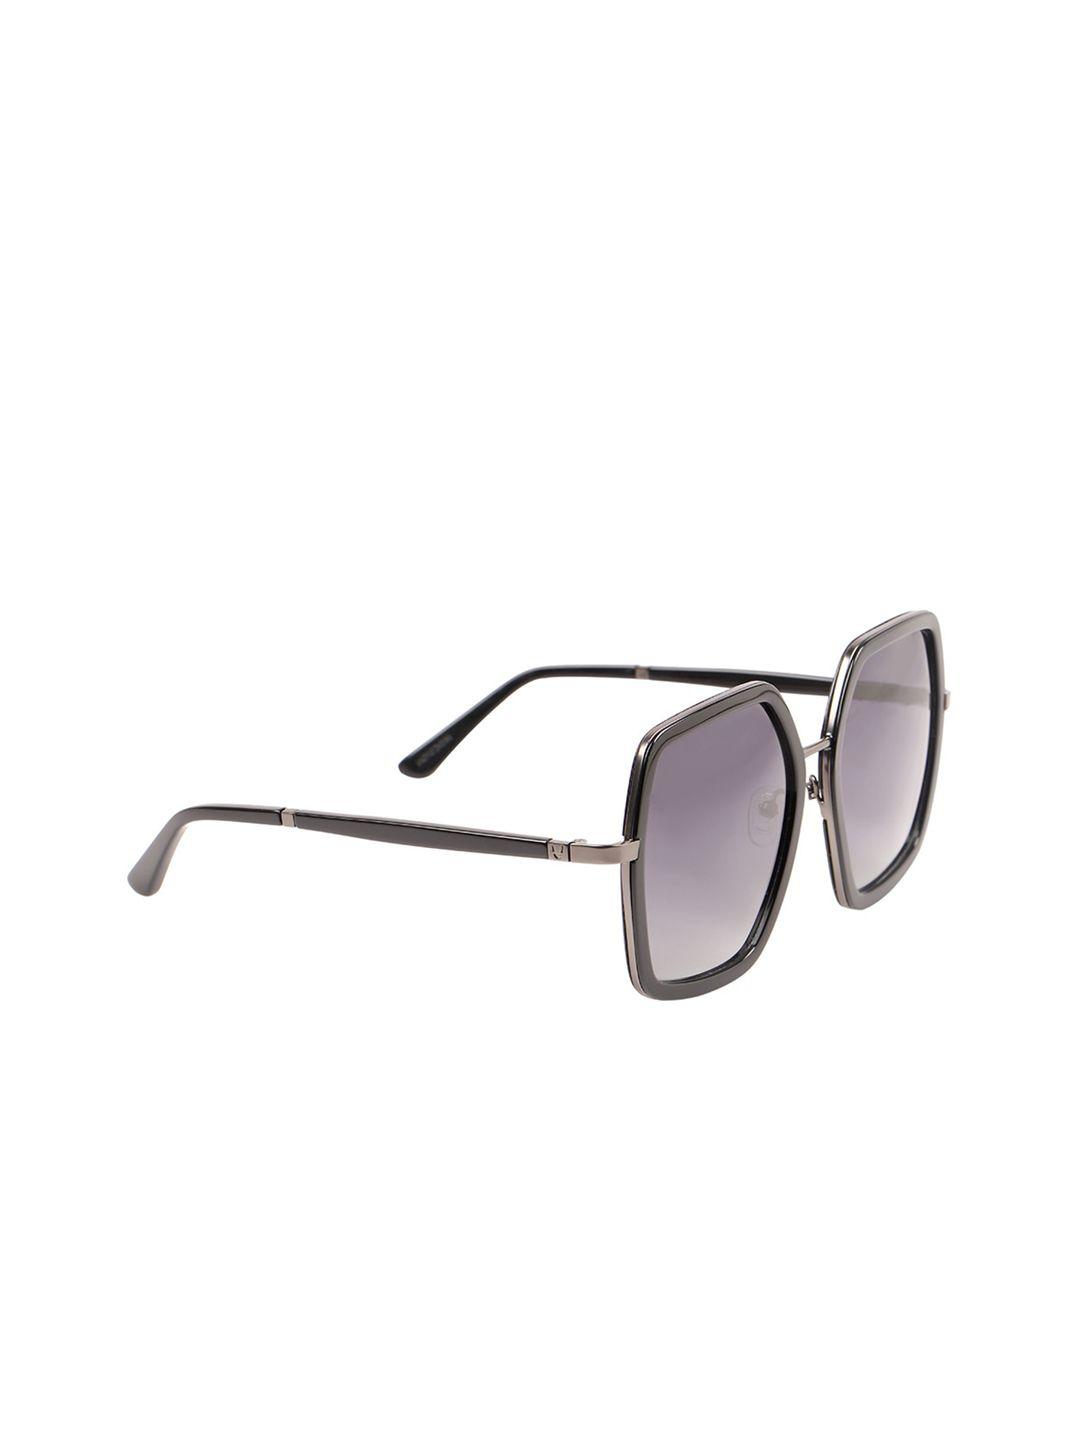 hidesign-women-polarised-&-uv-protected-oversized-sunglasses-8903439743673